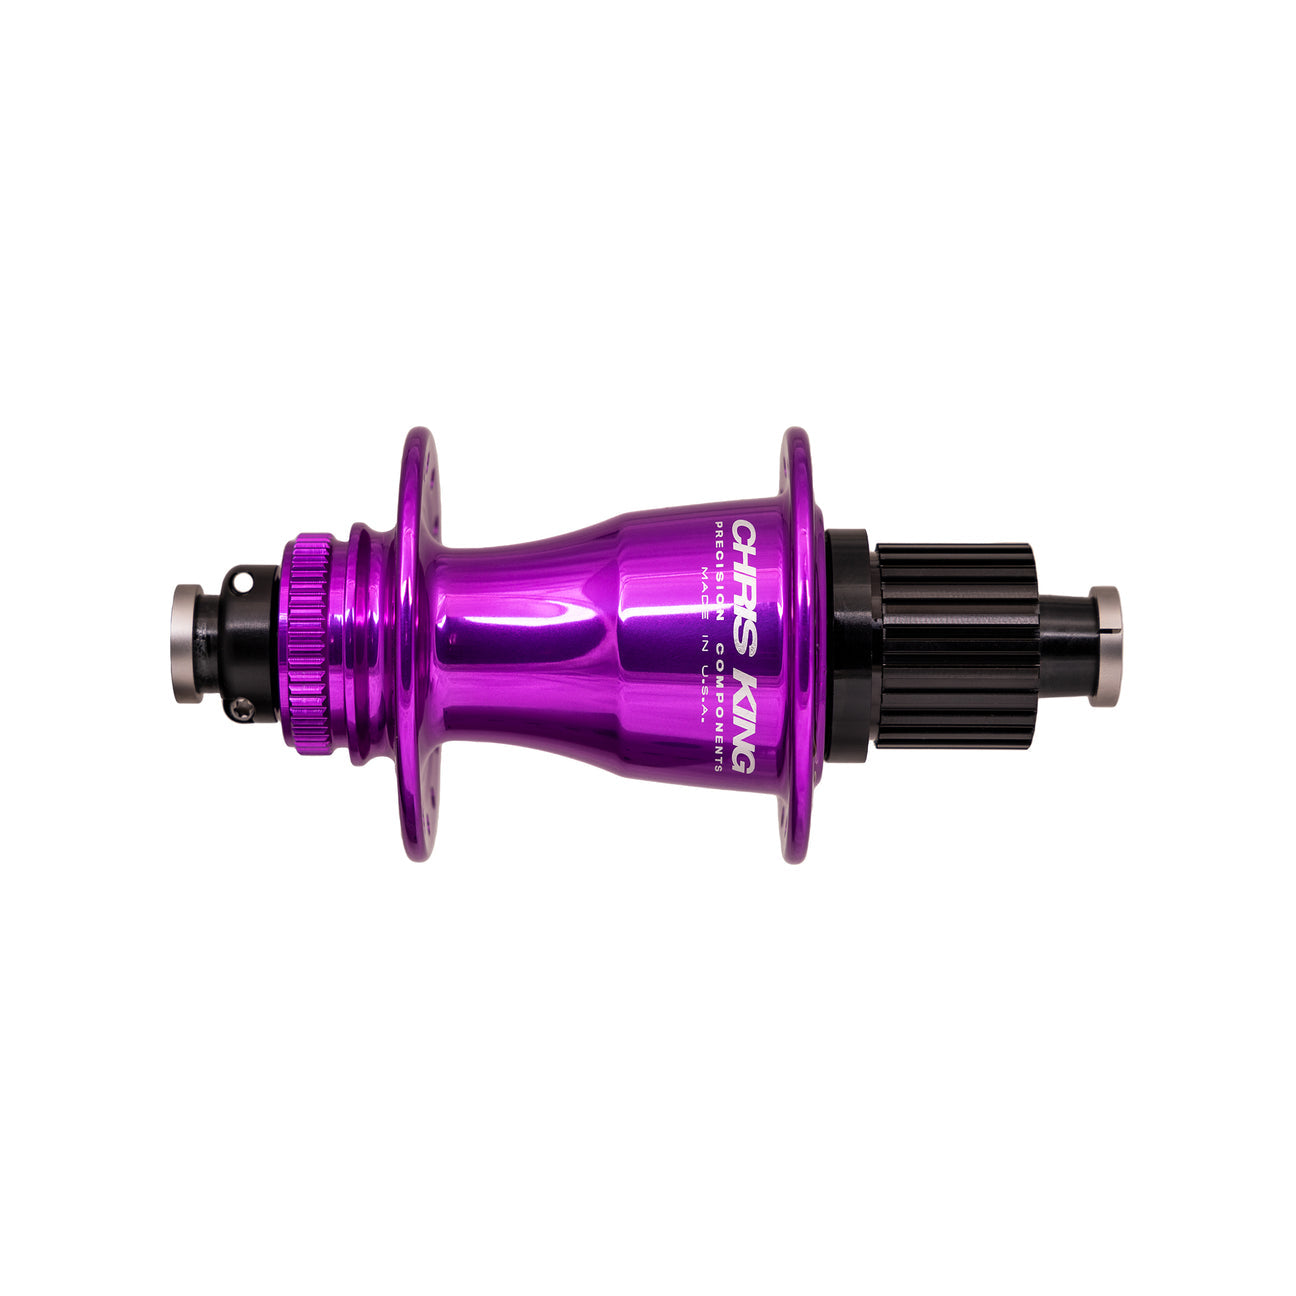 Chris king boost CL rear hub in 3D violet